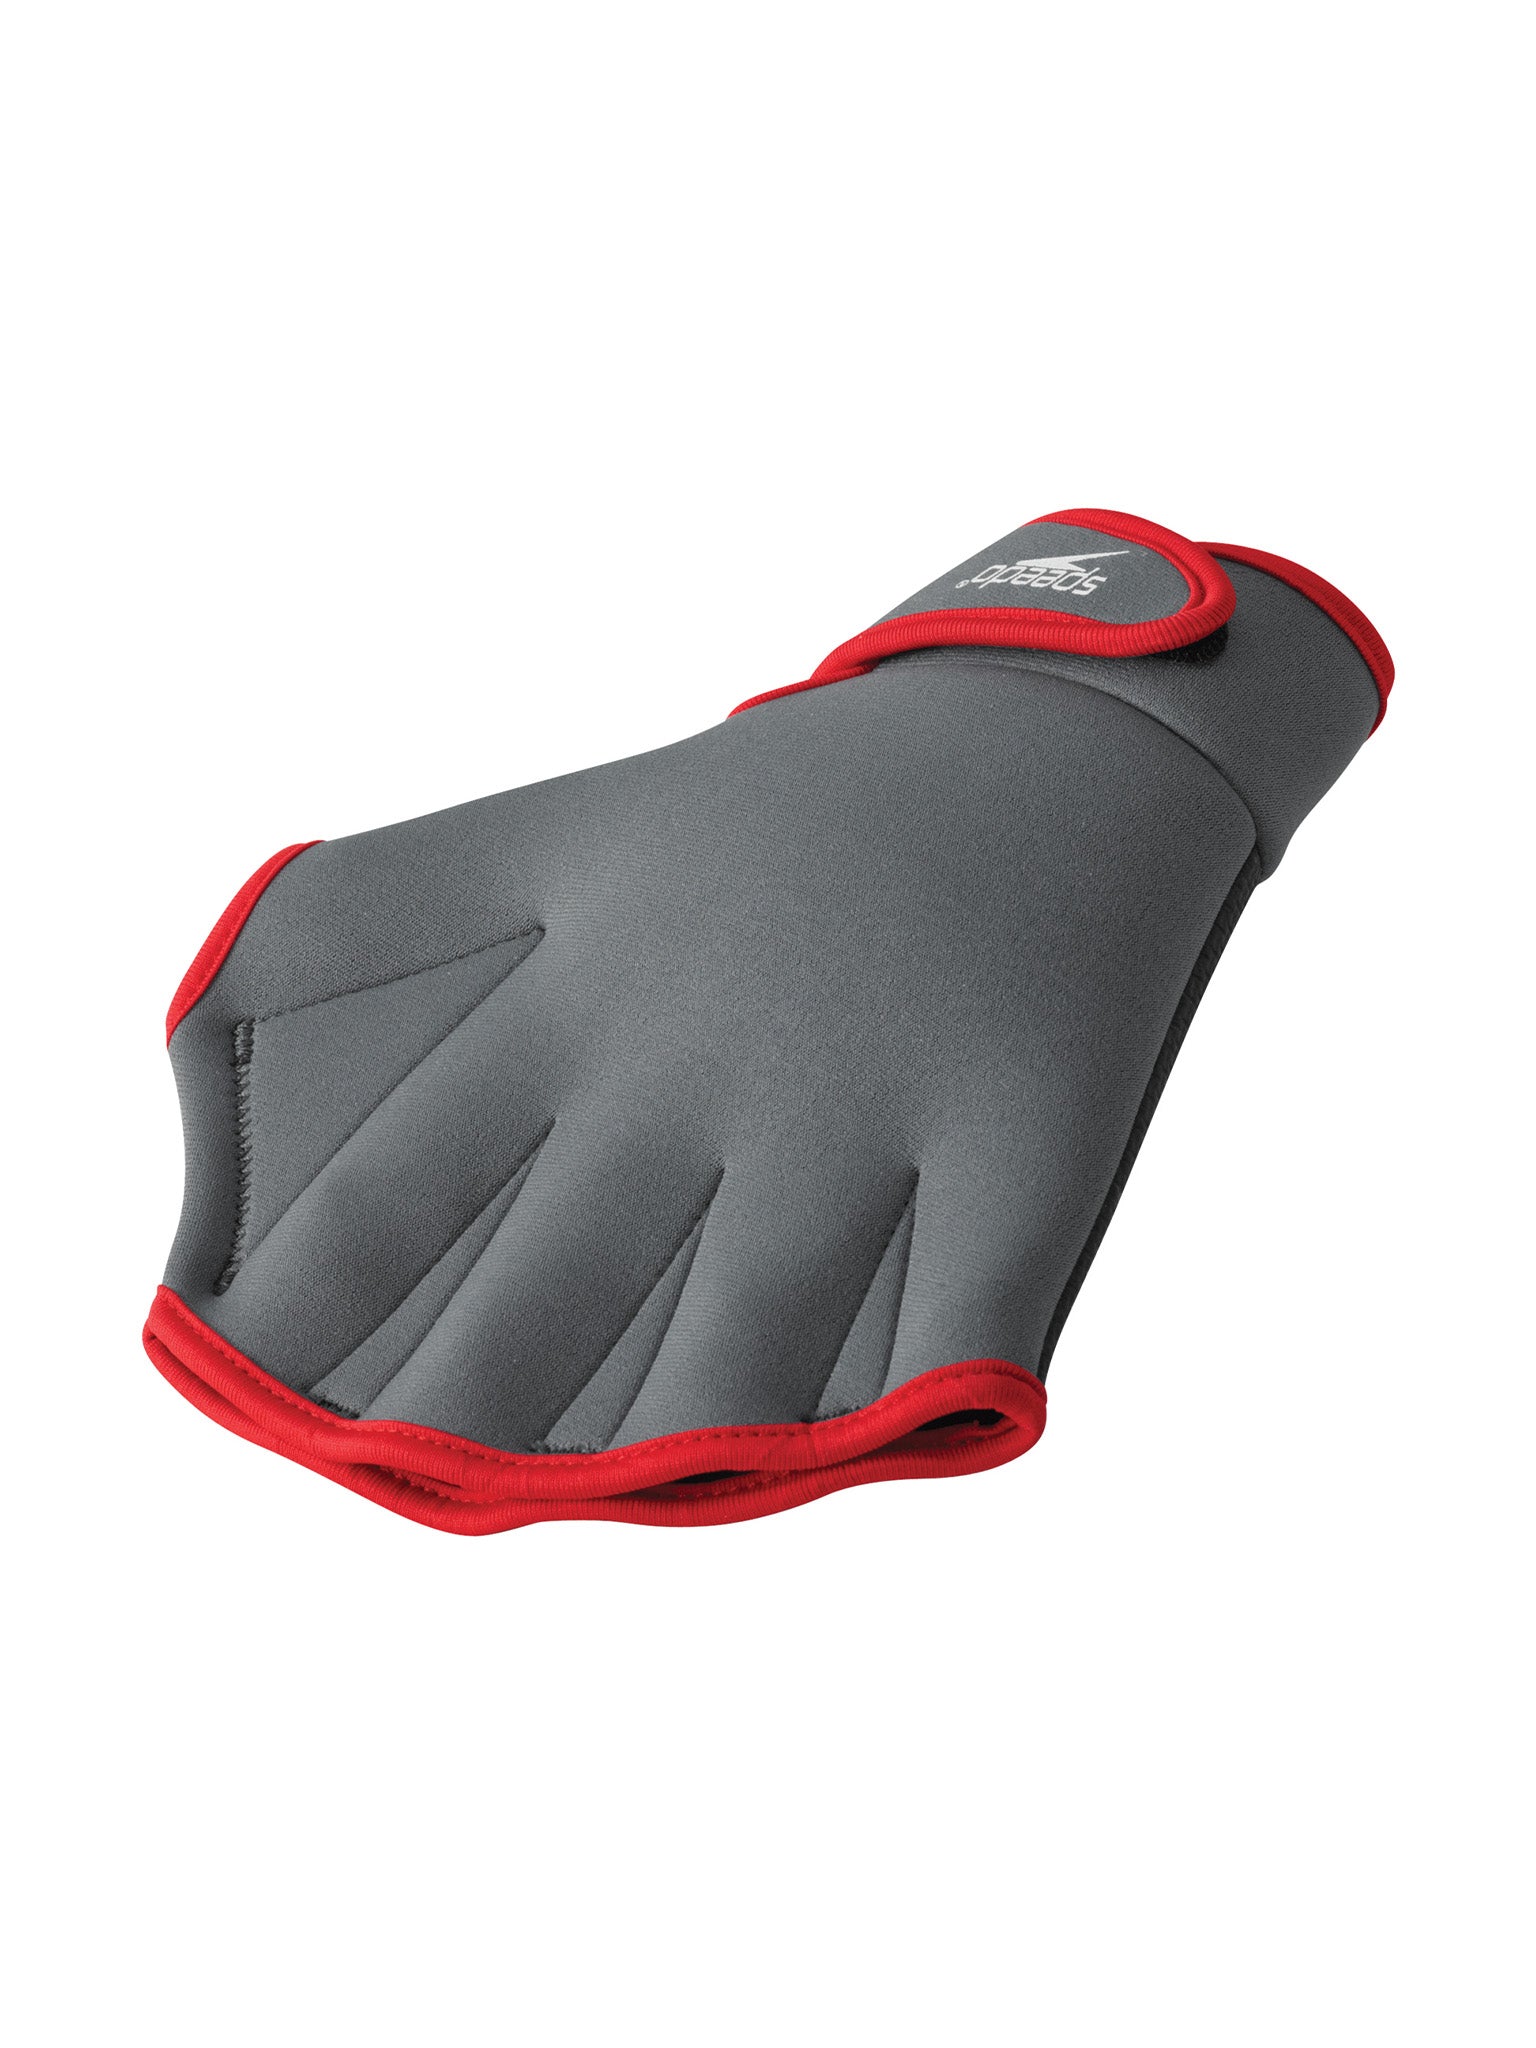 Aquatic Fitness Gloves - Grey